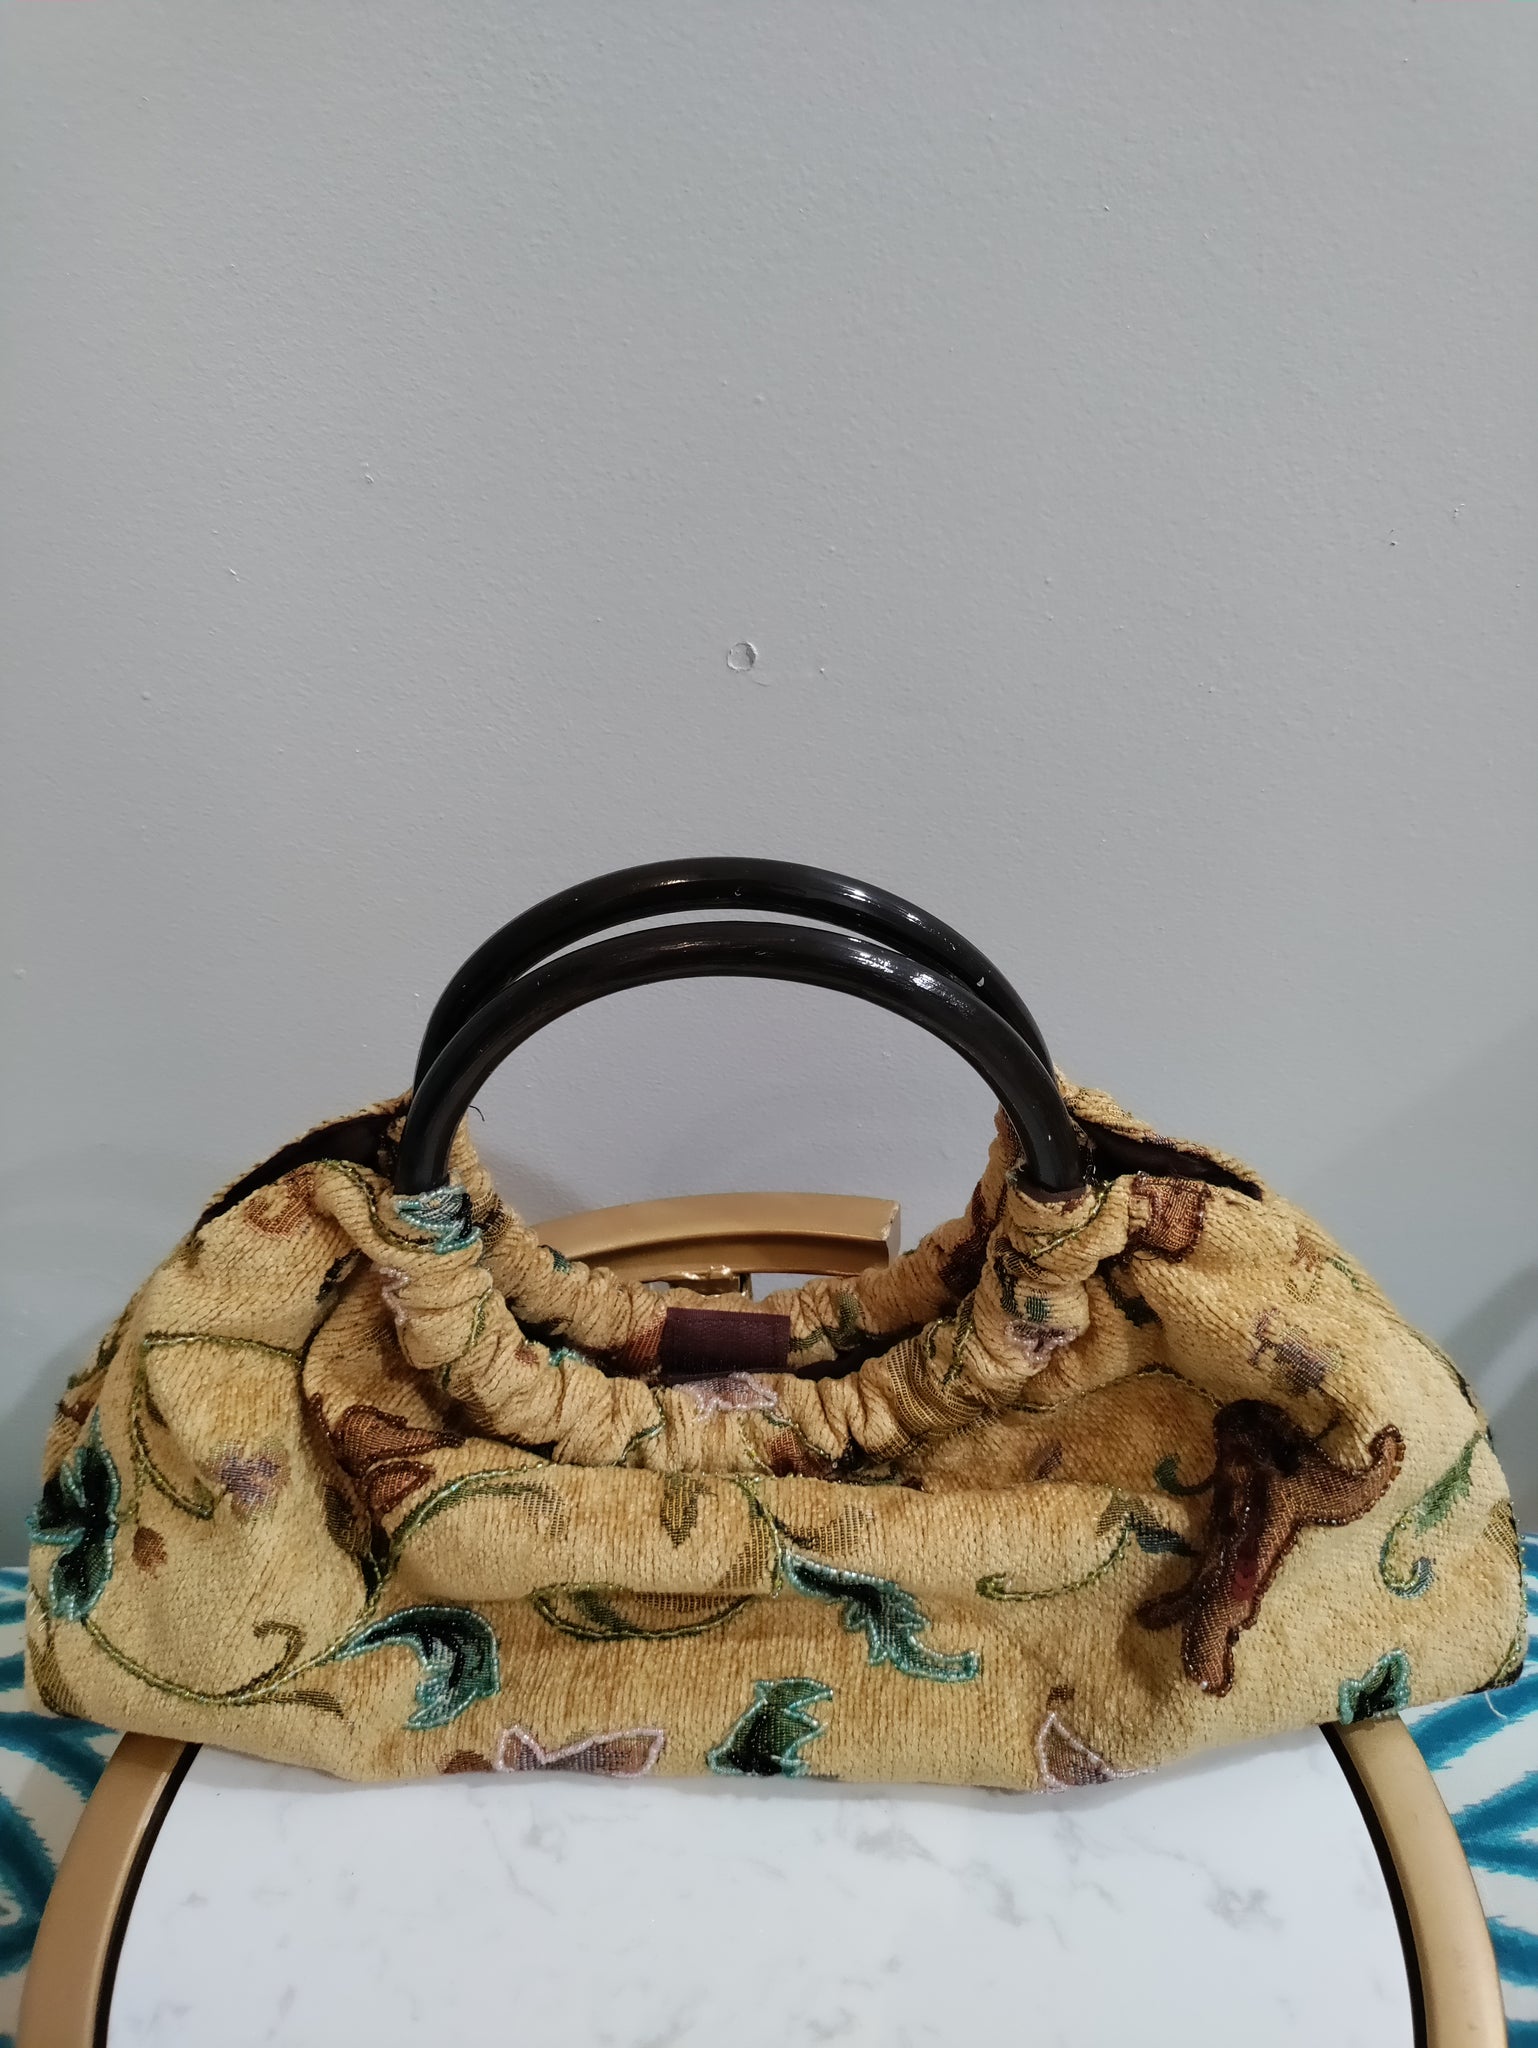 Vintage handbag